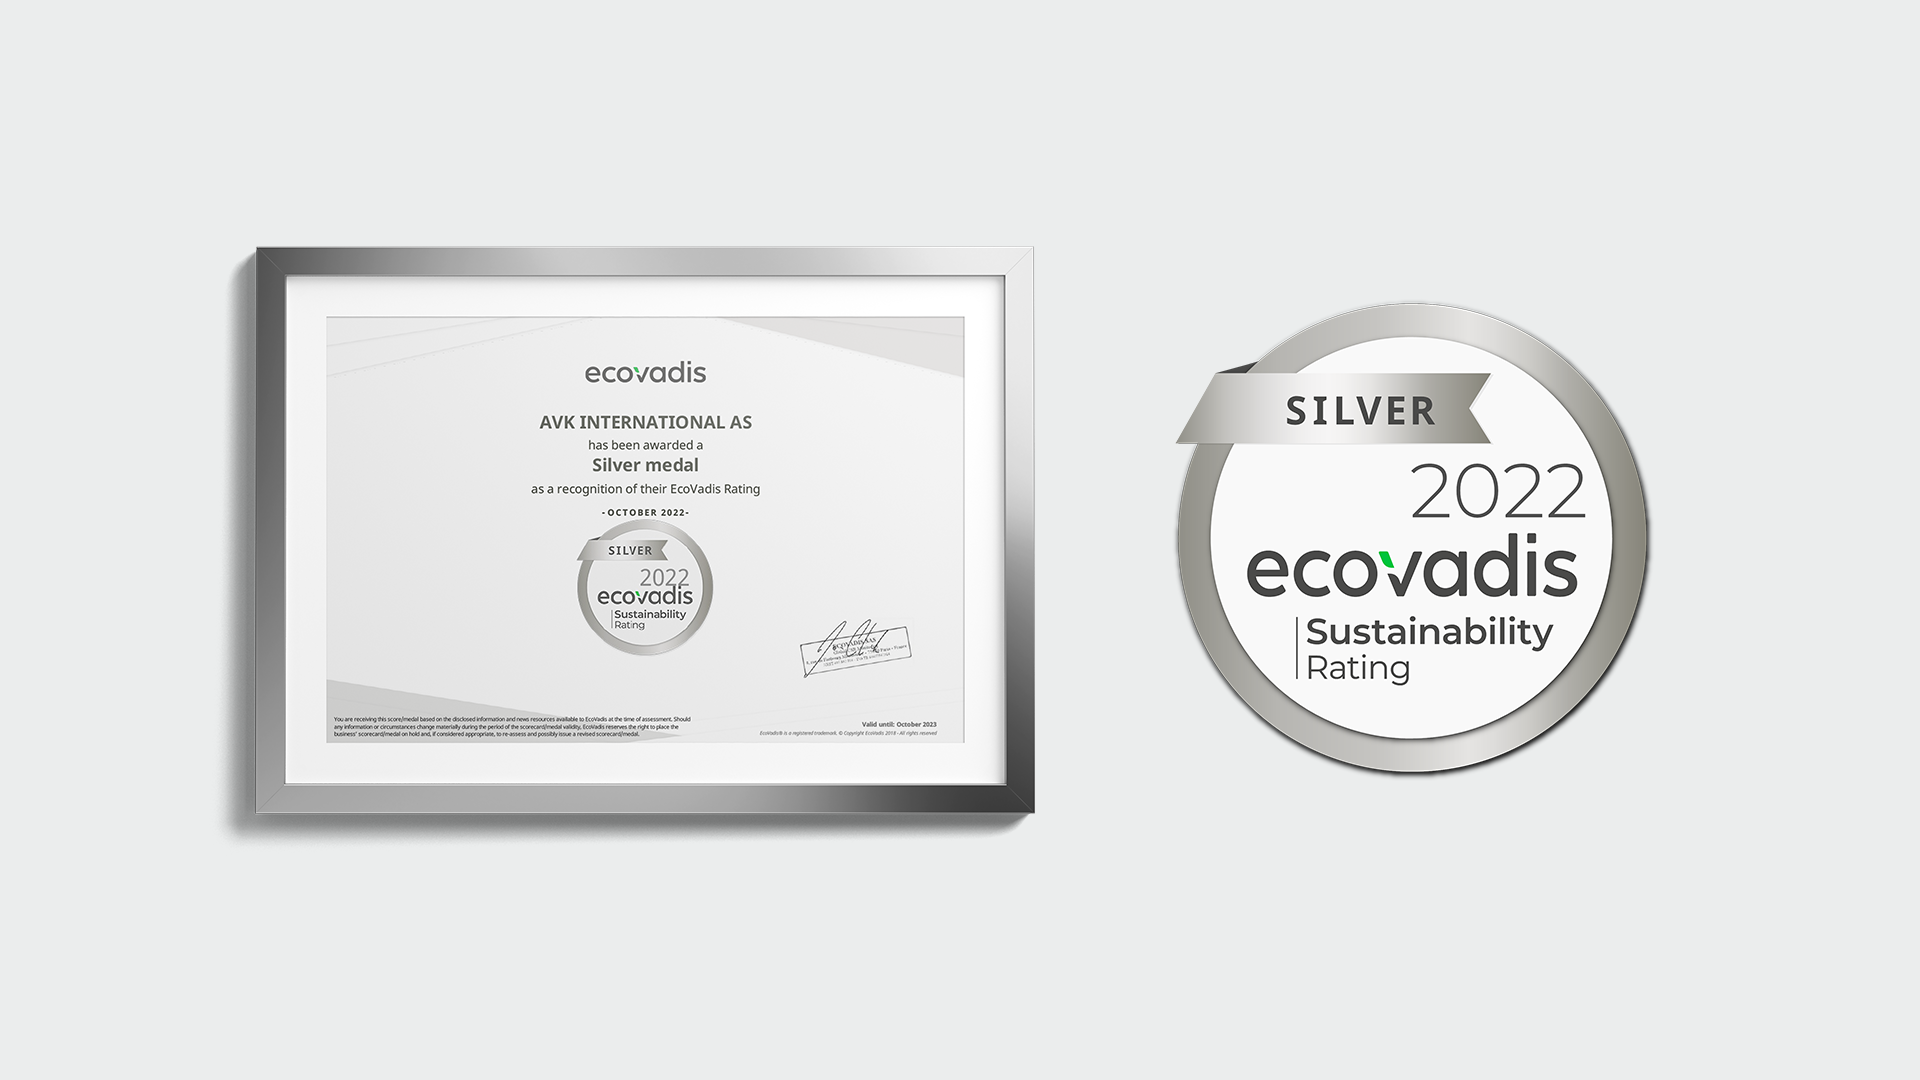 AVK International has been awarded an EcoVadis silver medal